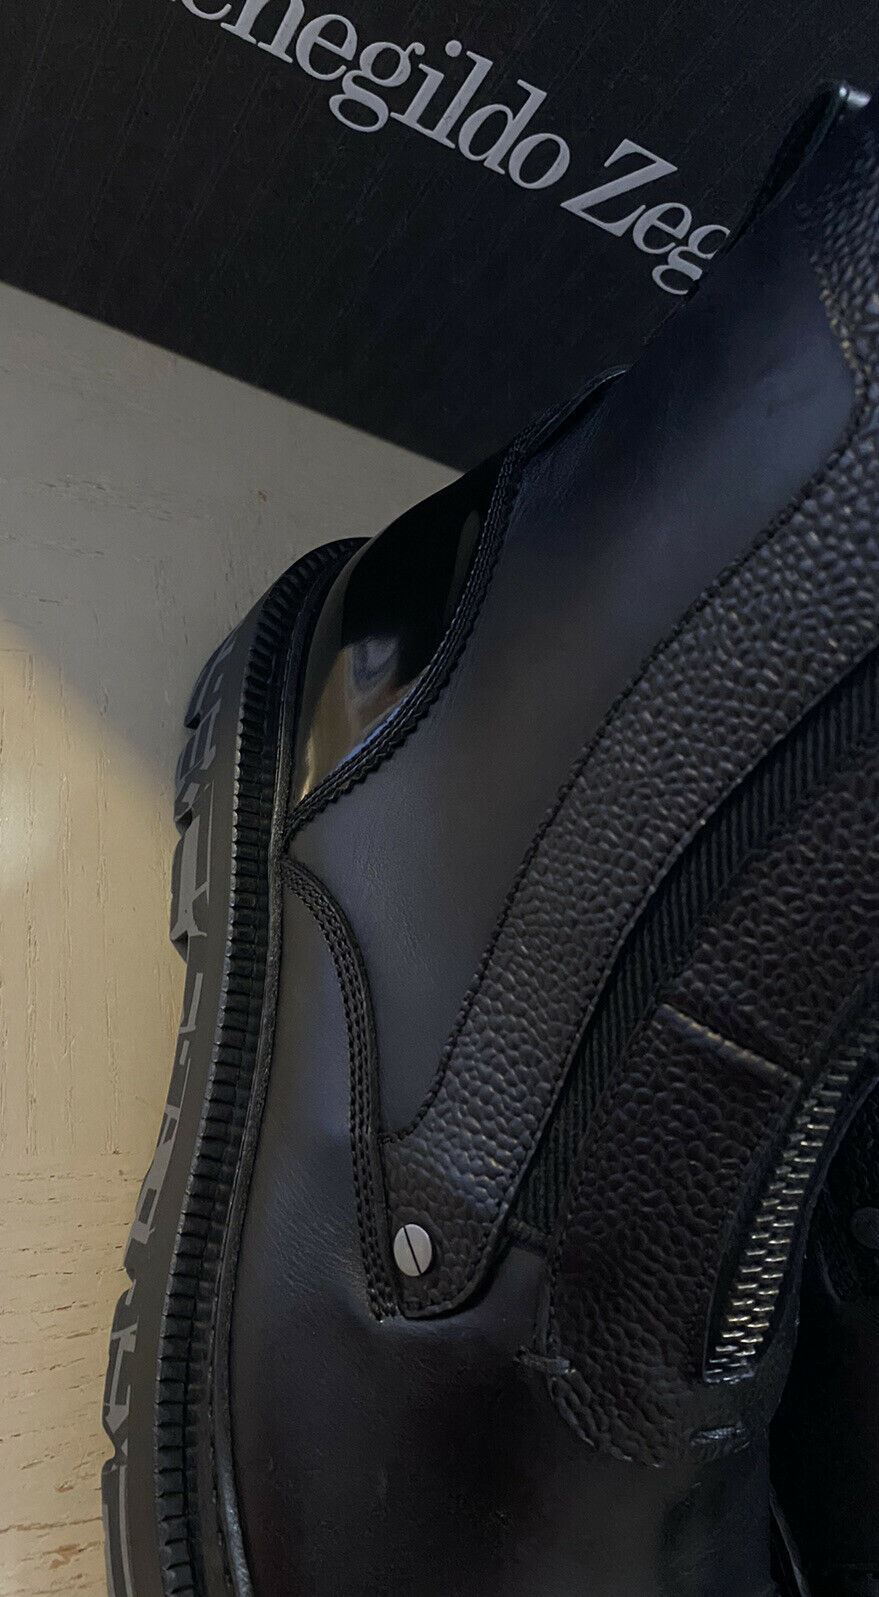 New $1595 Ermenegildo Zegna Couture Leather Light Boots Shoes Black 10 US Italy